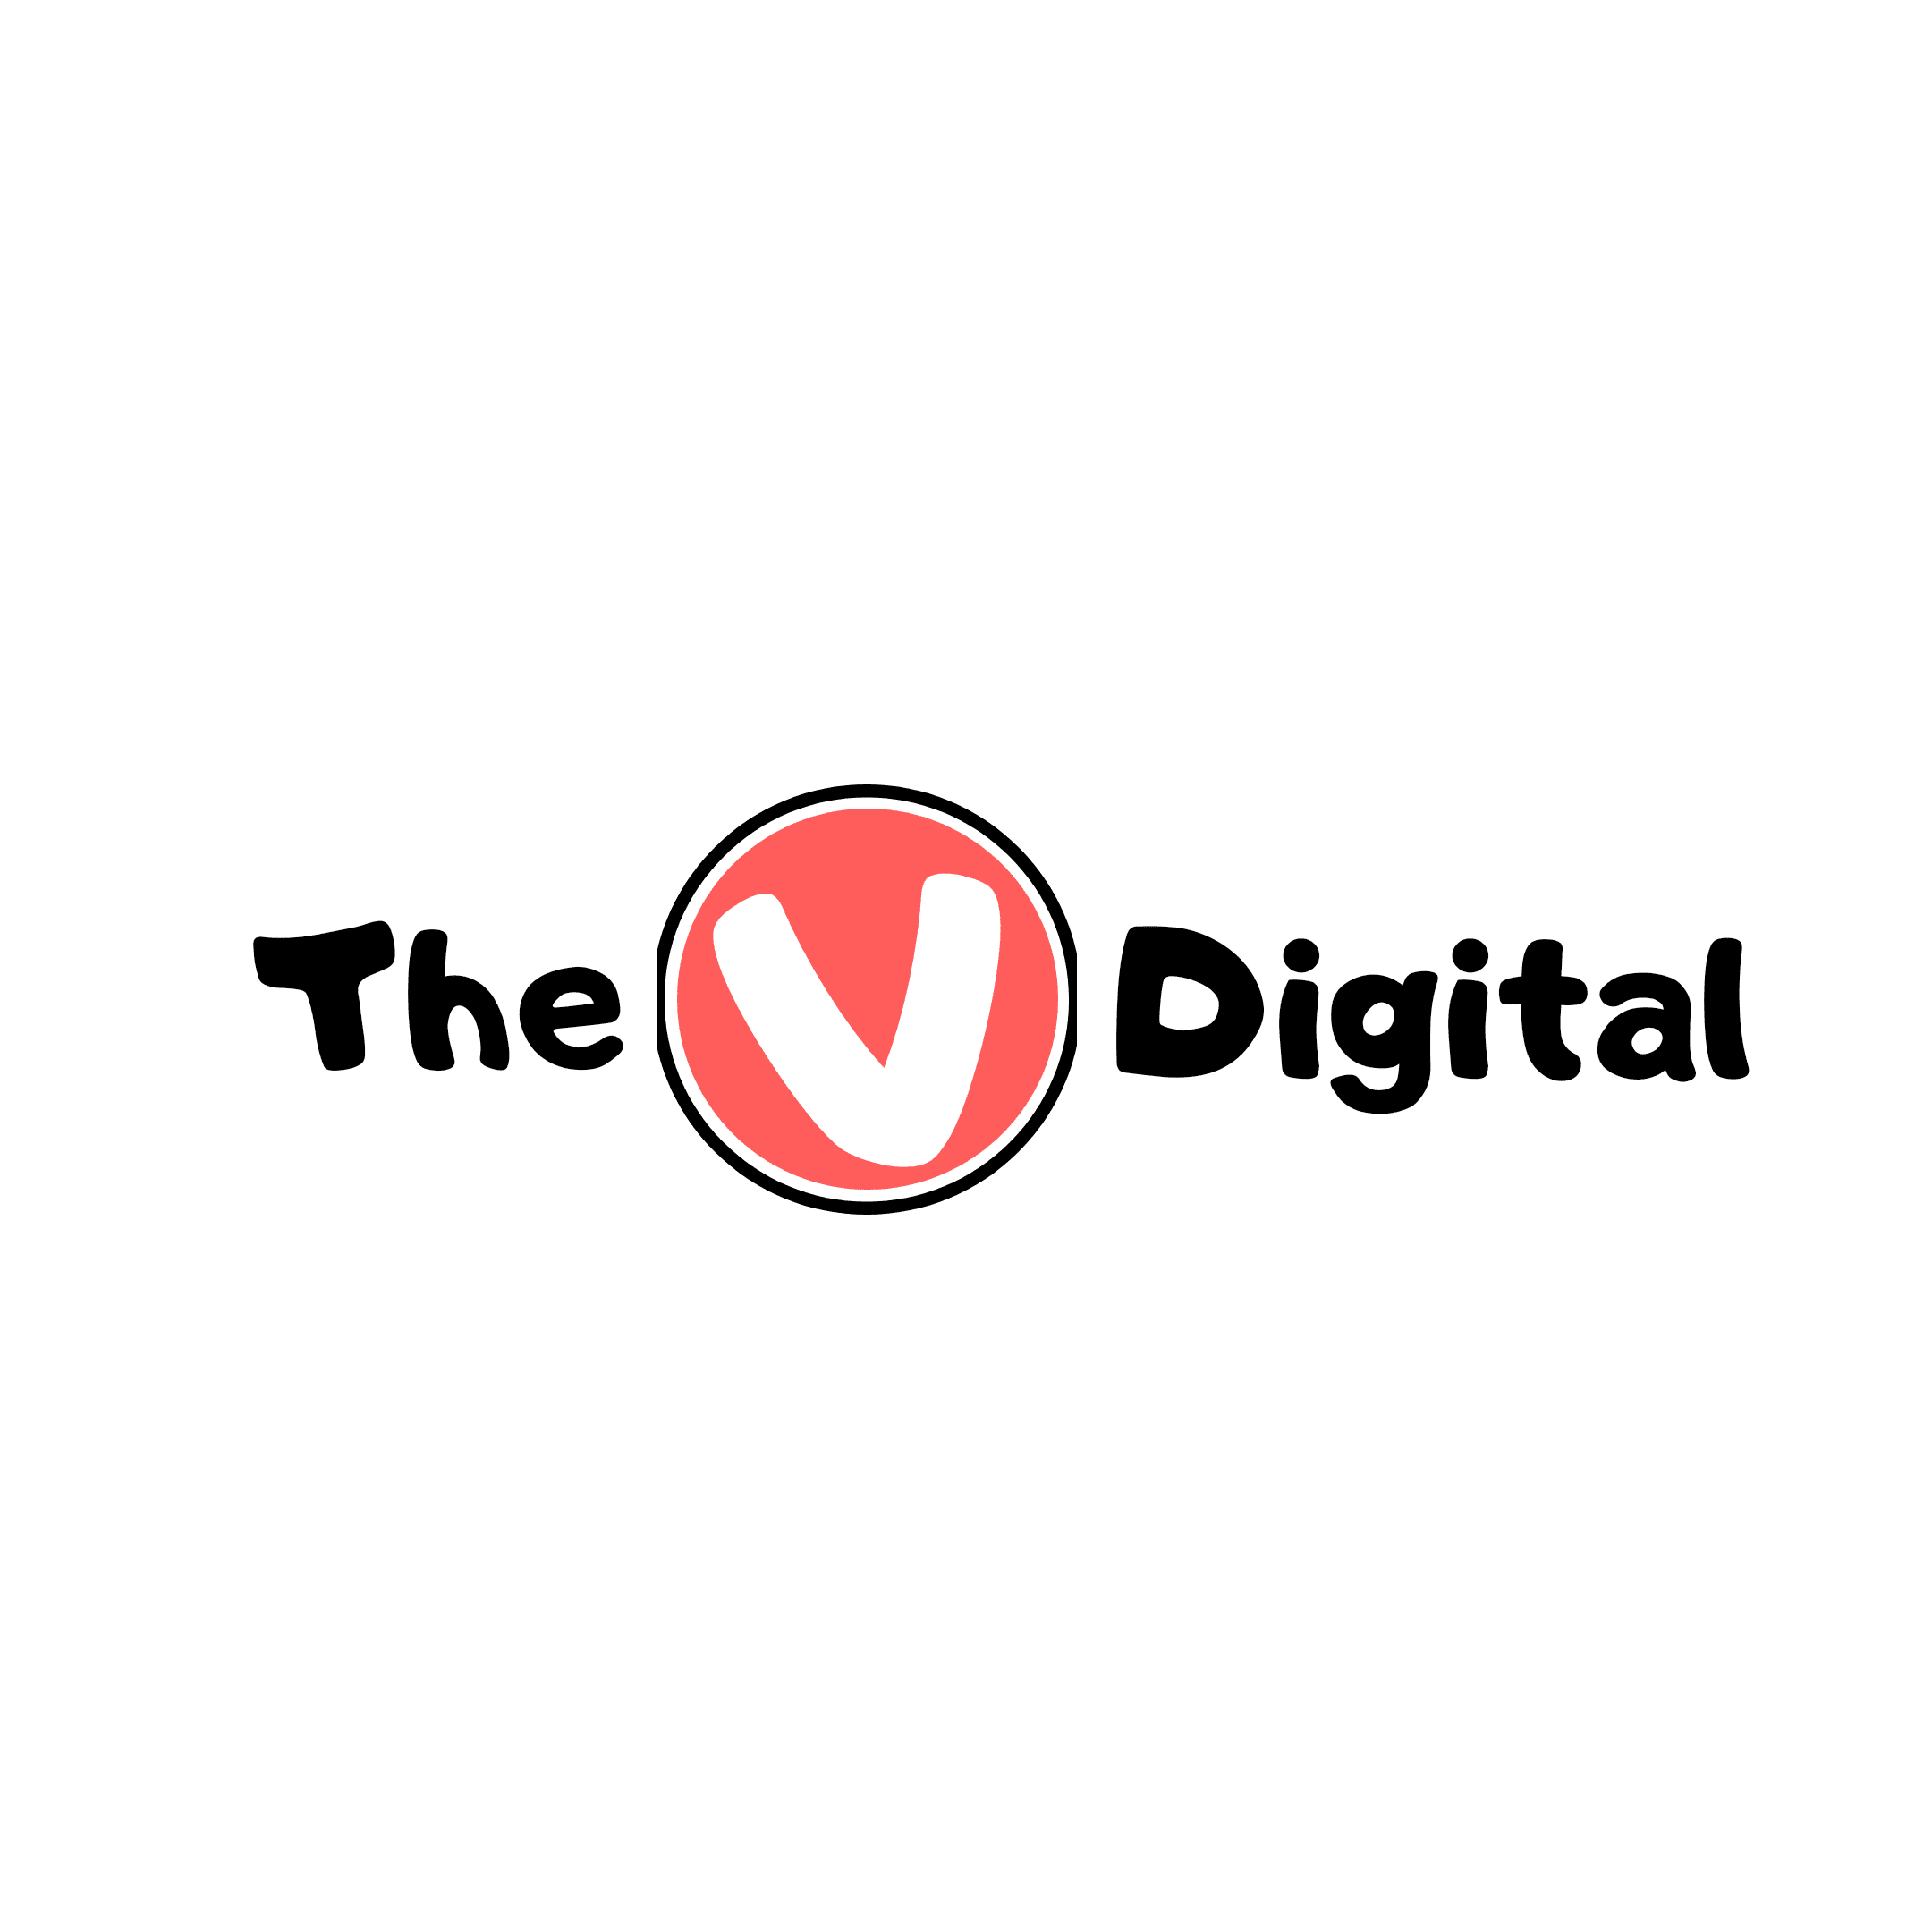 The V Digital